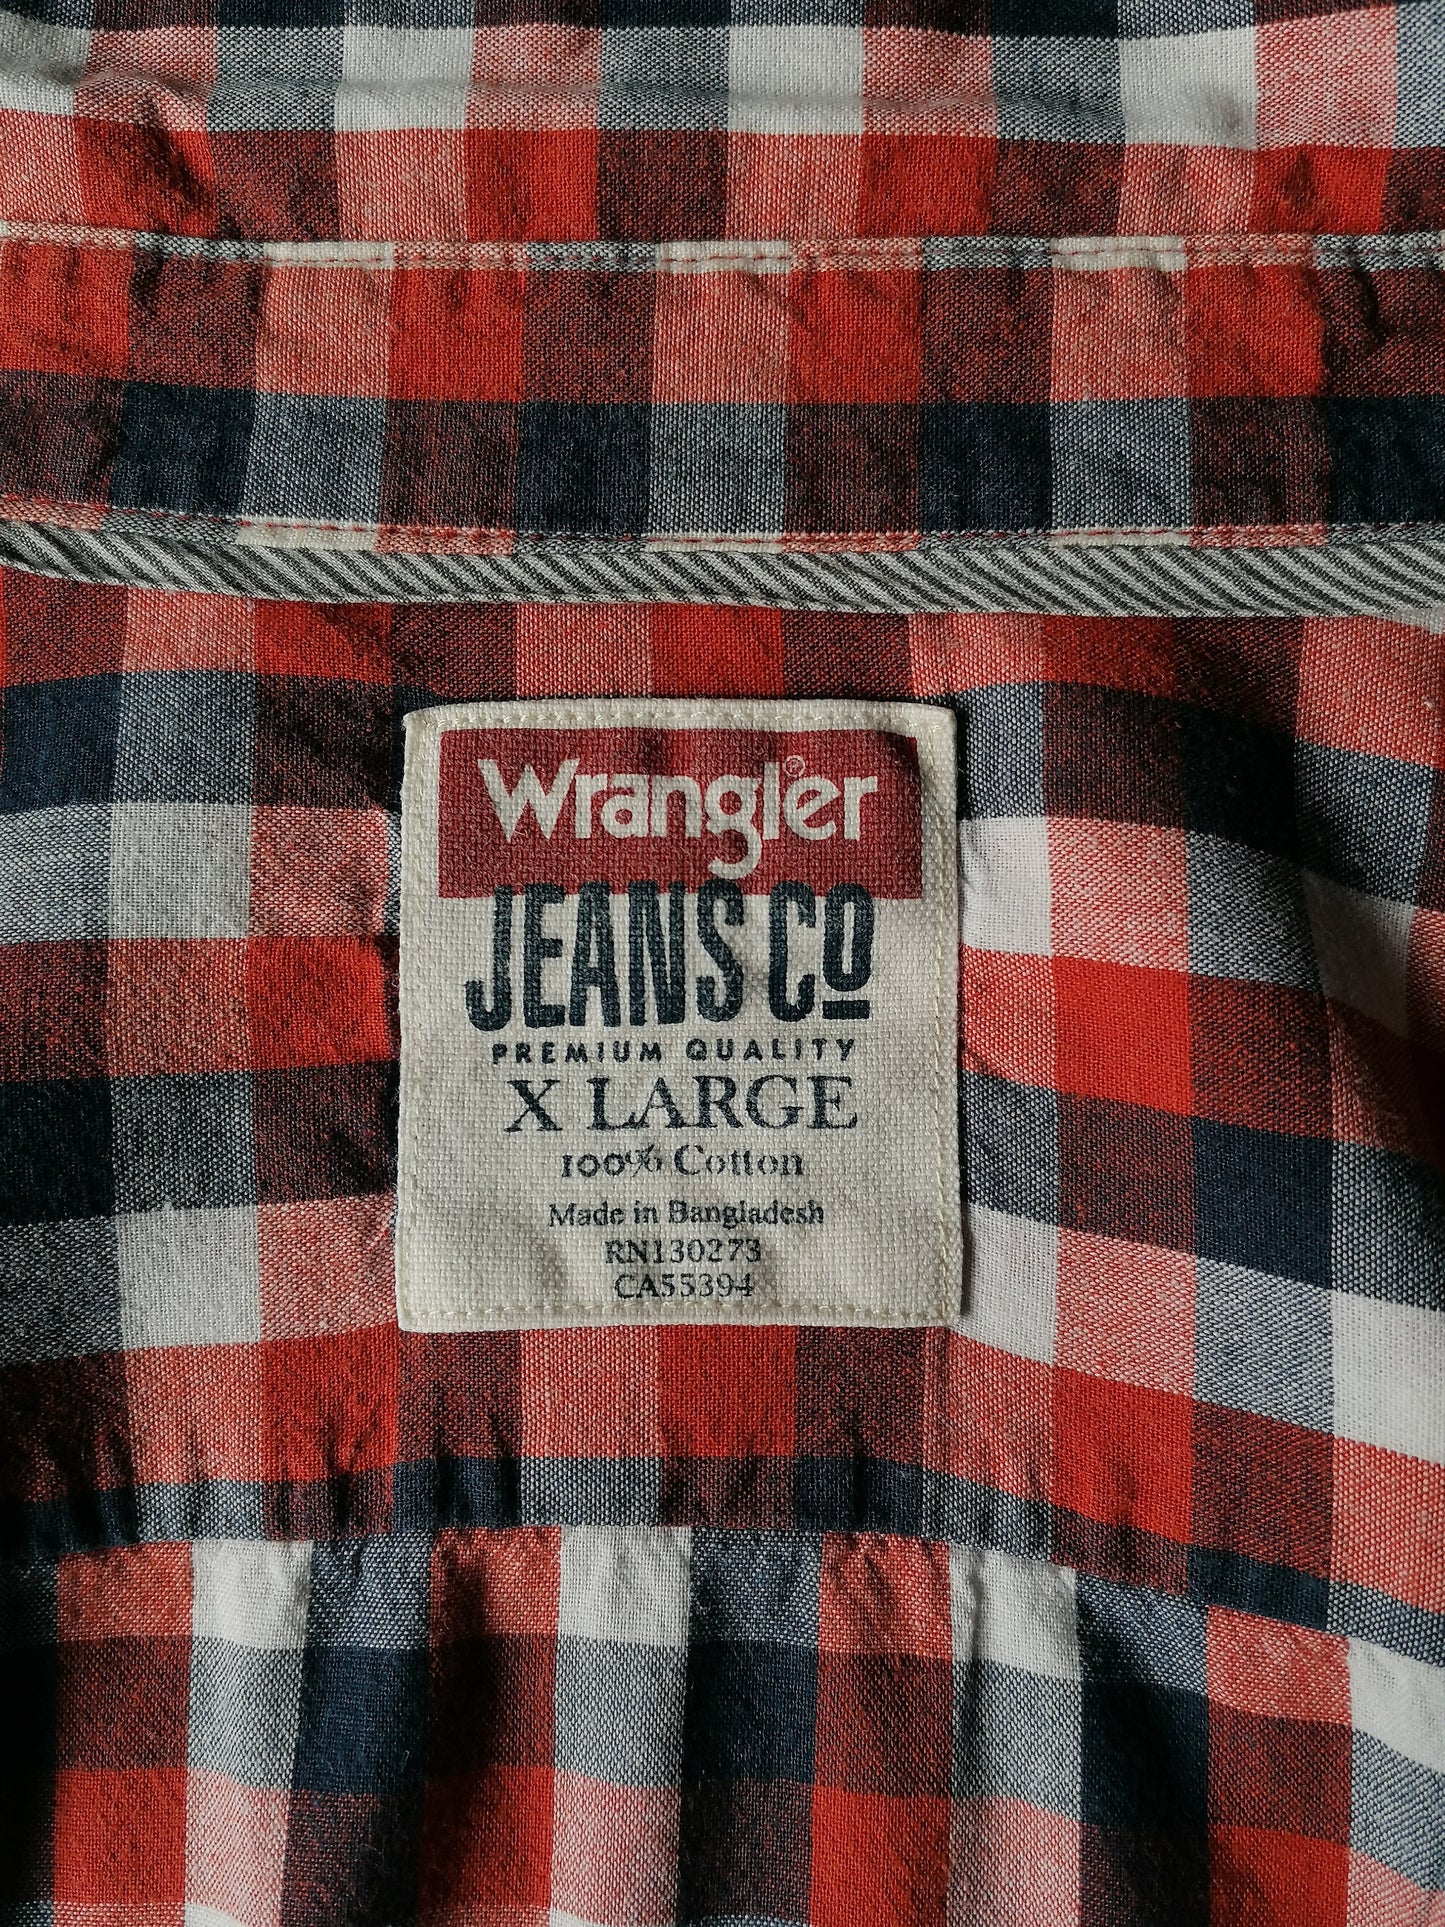 Wrangler shirt. Blue red white blocked. Size X L / XXL - 2XL.